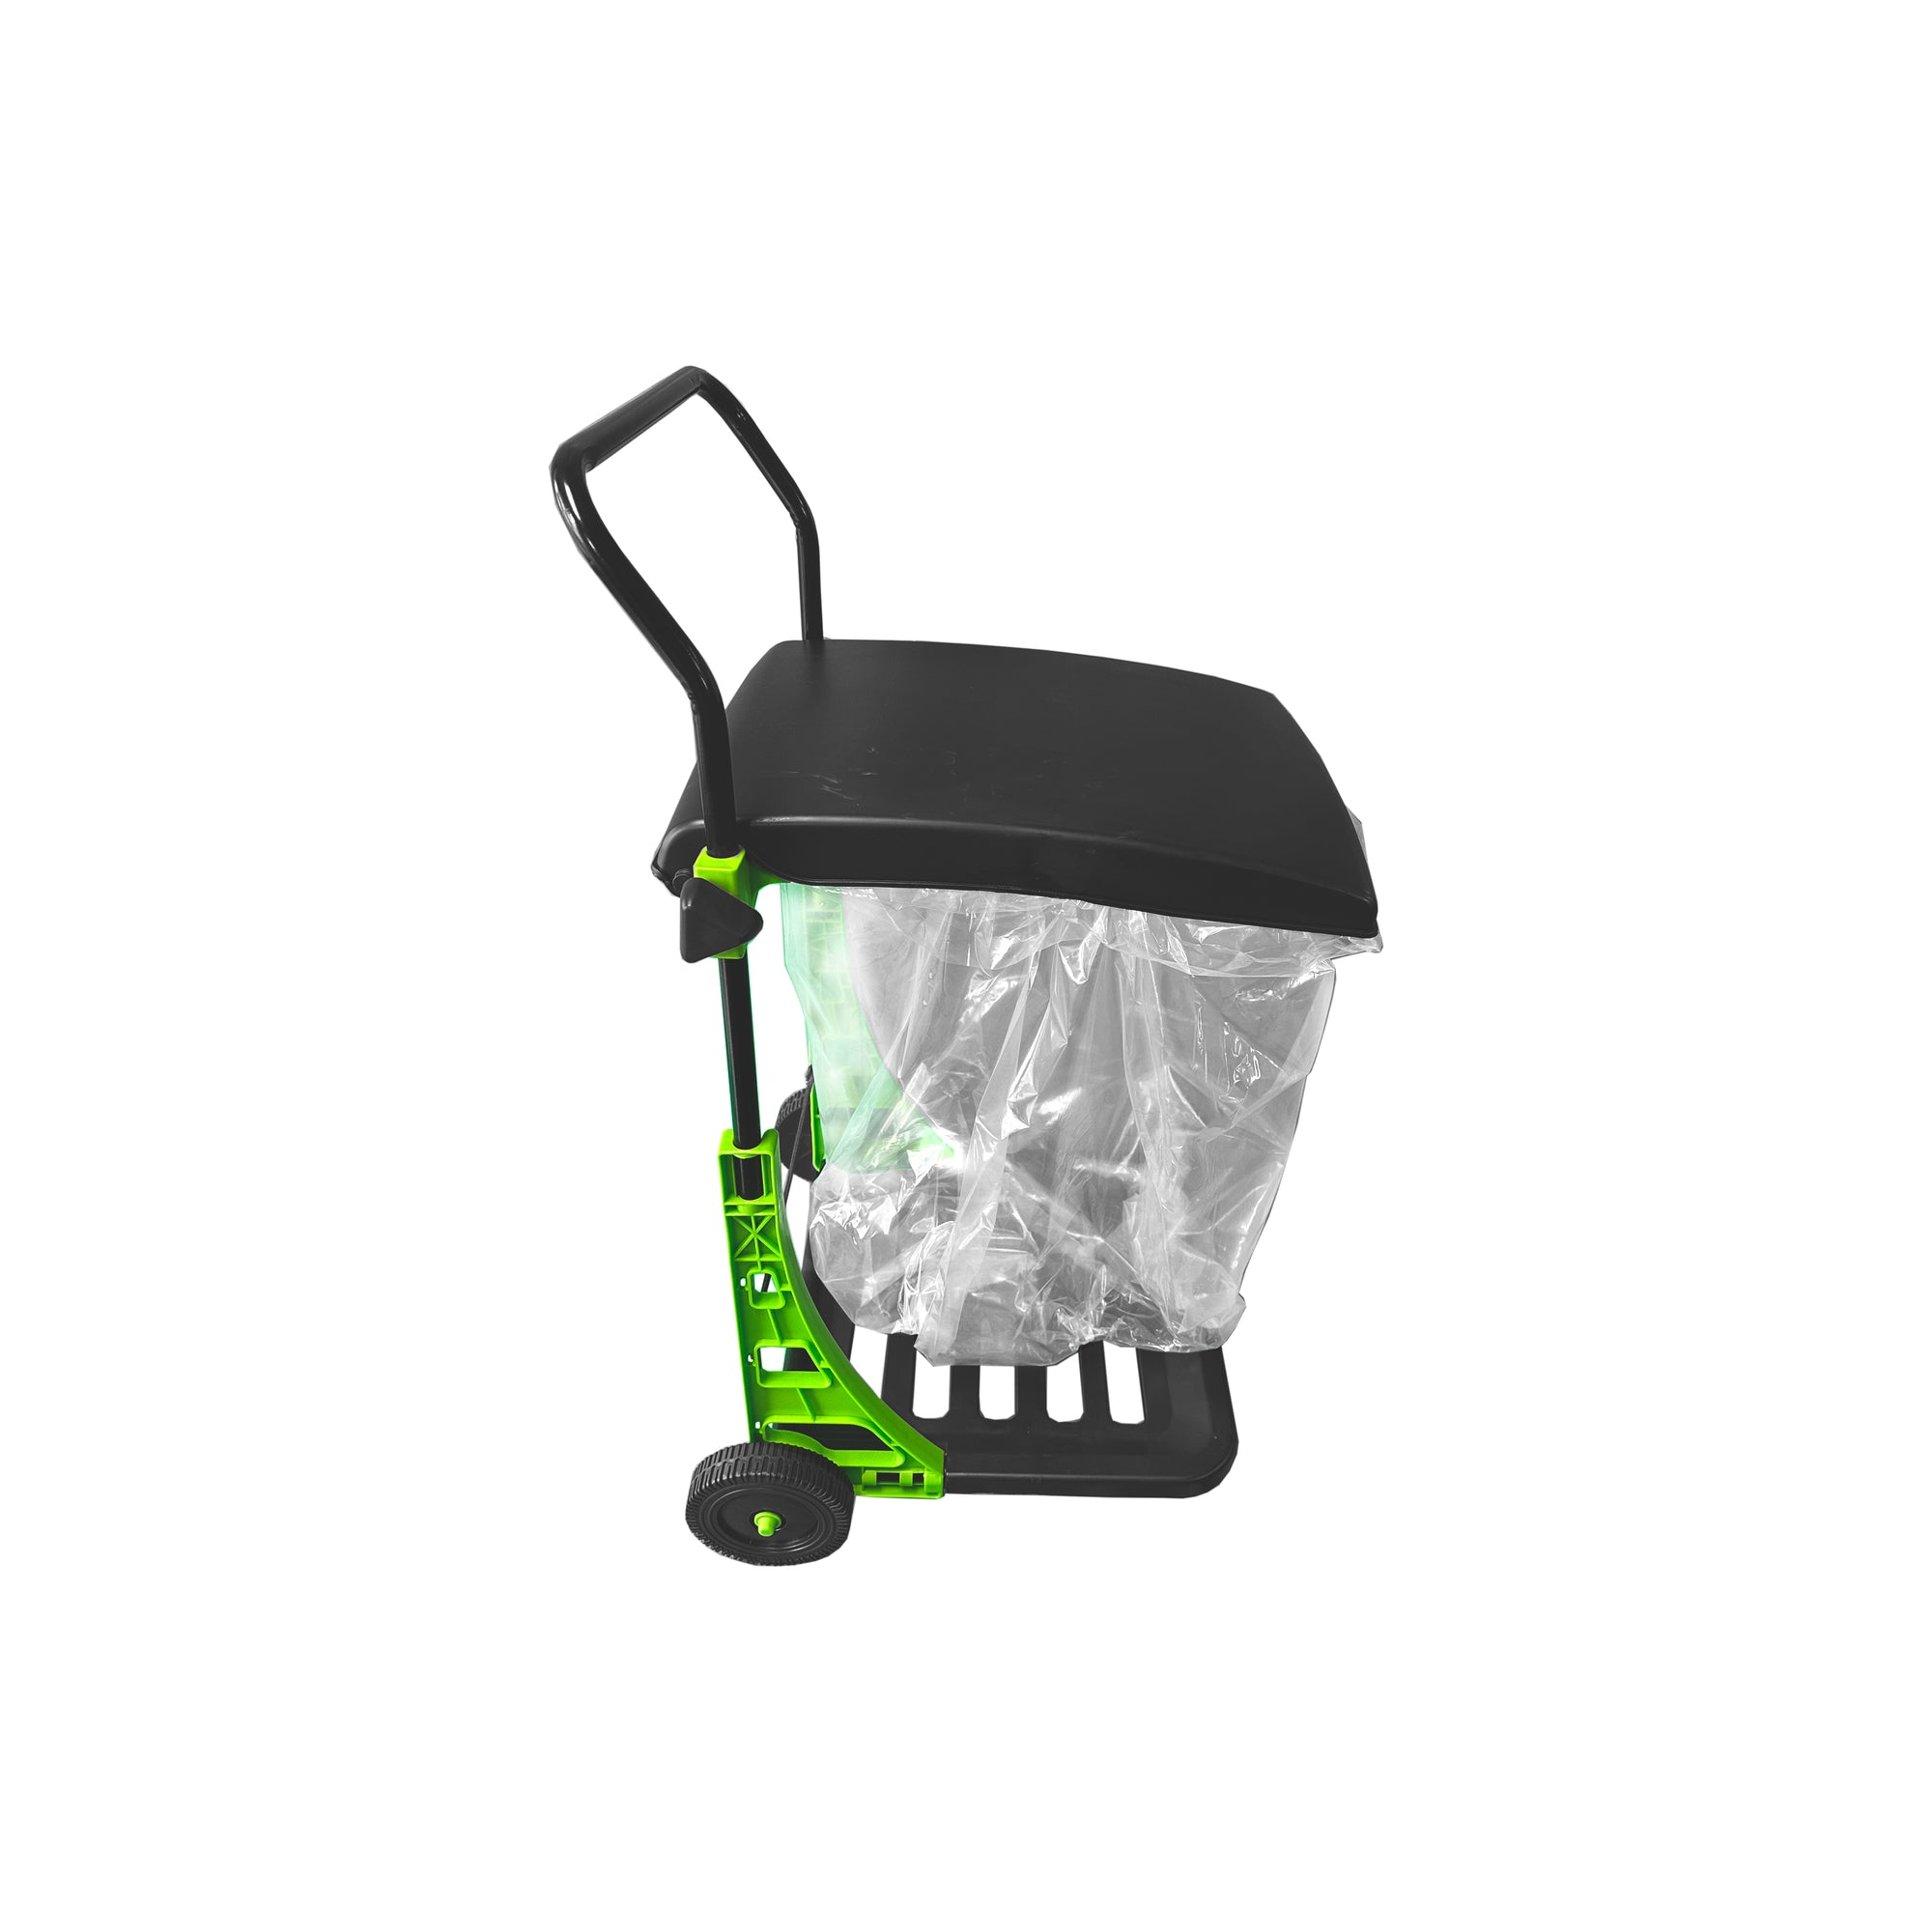 All-Purpose Wheeled Garden Cart